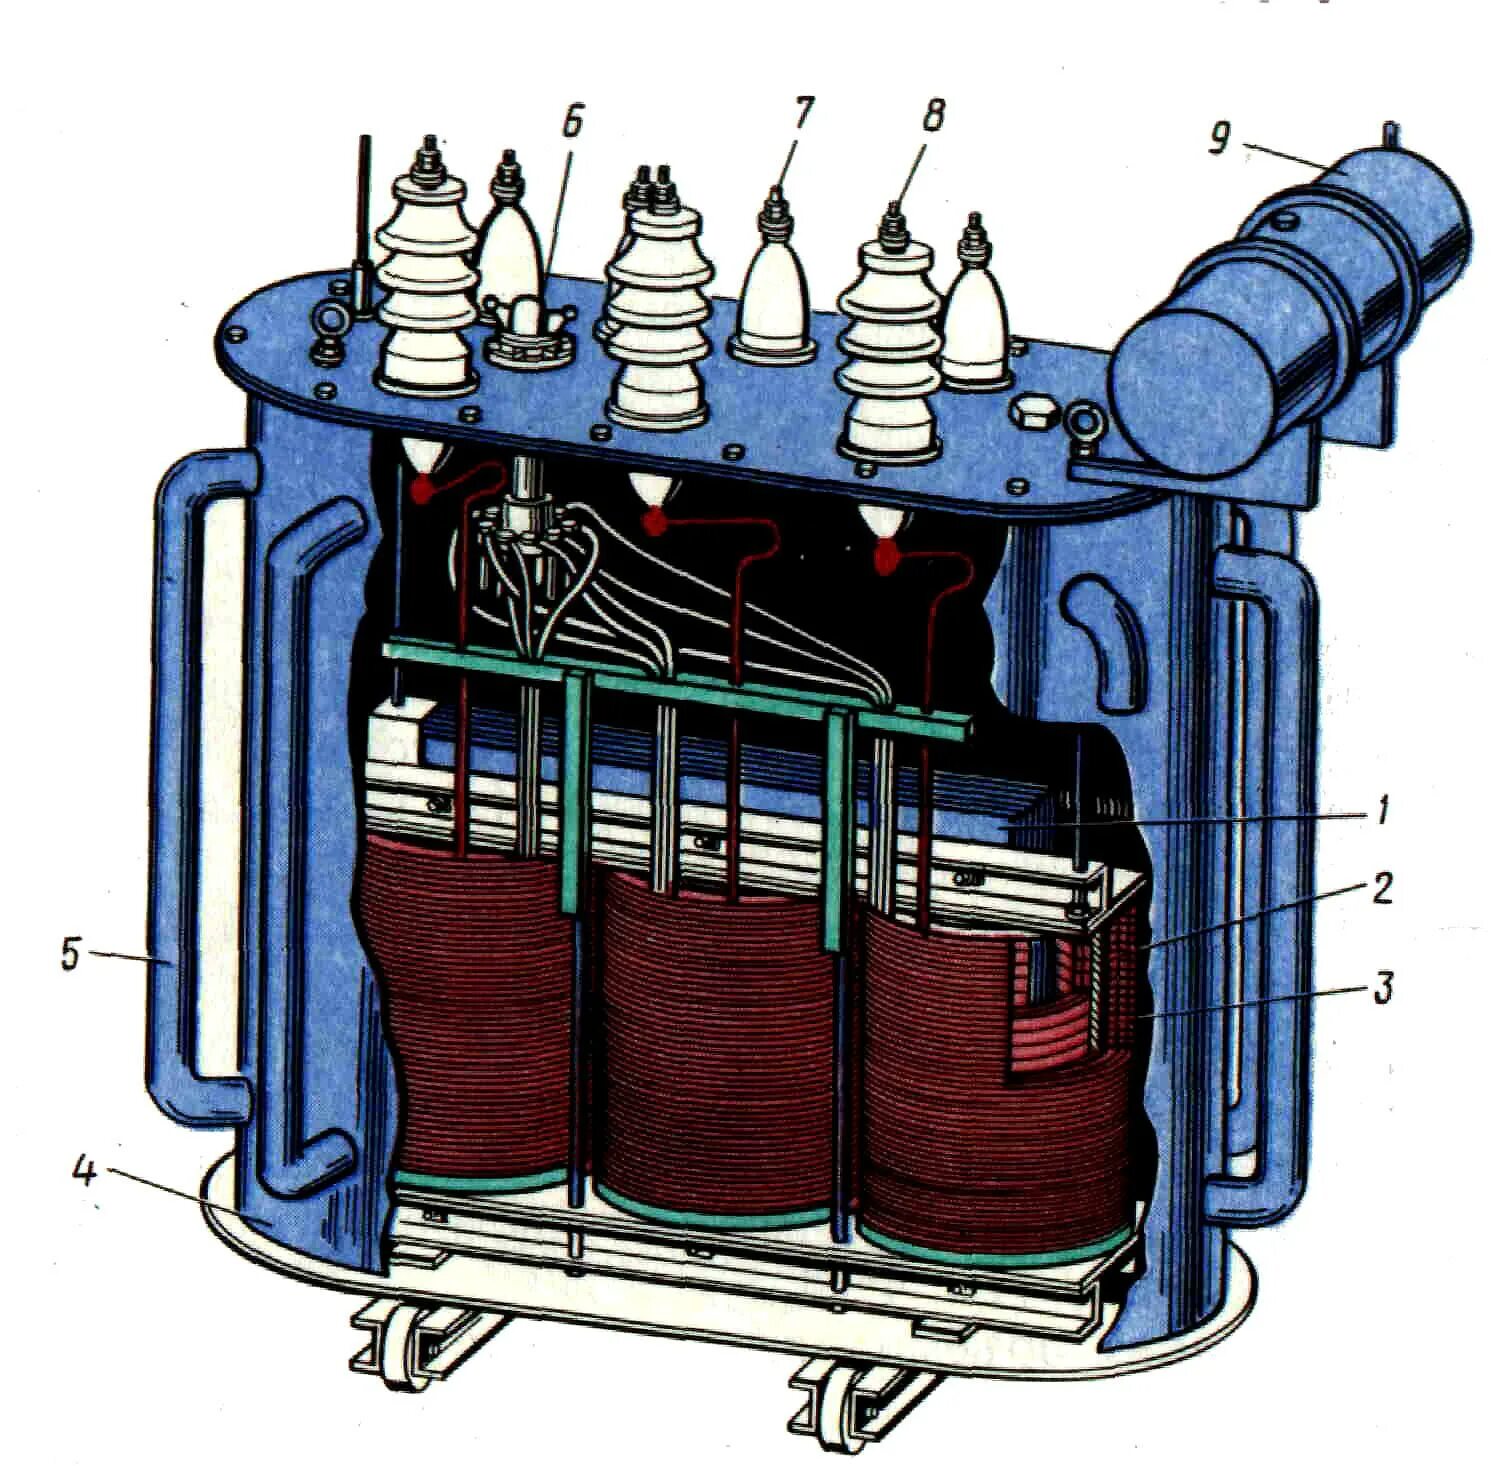 Состав трансформатора. Устройство силового трансформатора 10/0.4 кв. Устройство силового трансформатора 6/0.4 кв. Из чего состоит силовой трансформатор 10/0.4 кв. Трёхфазный трансформатор СЦБ.